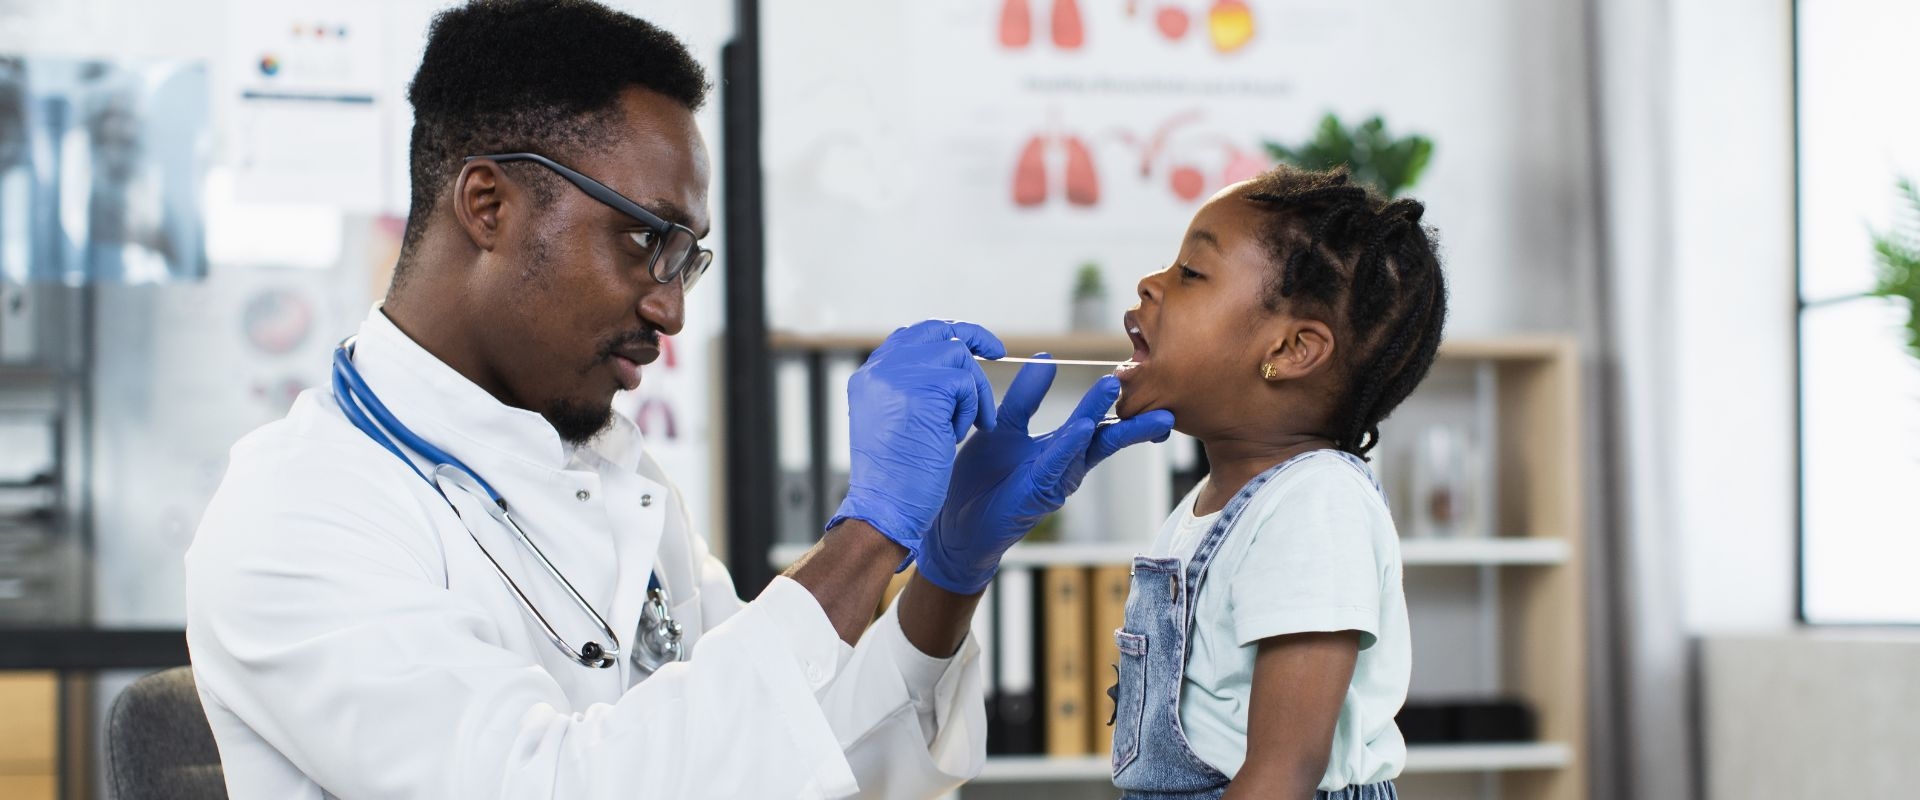 School nurse examines student's throat